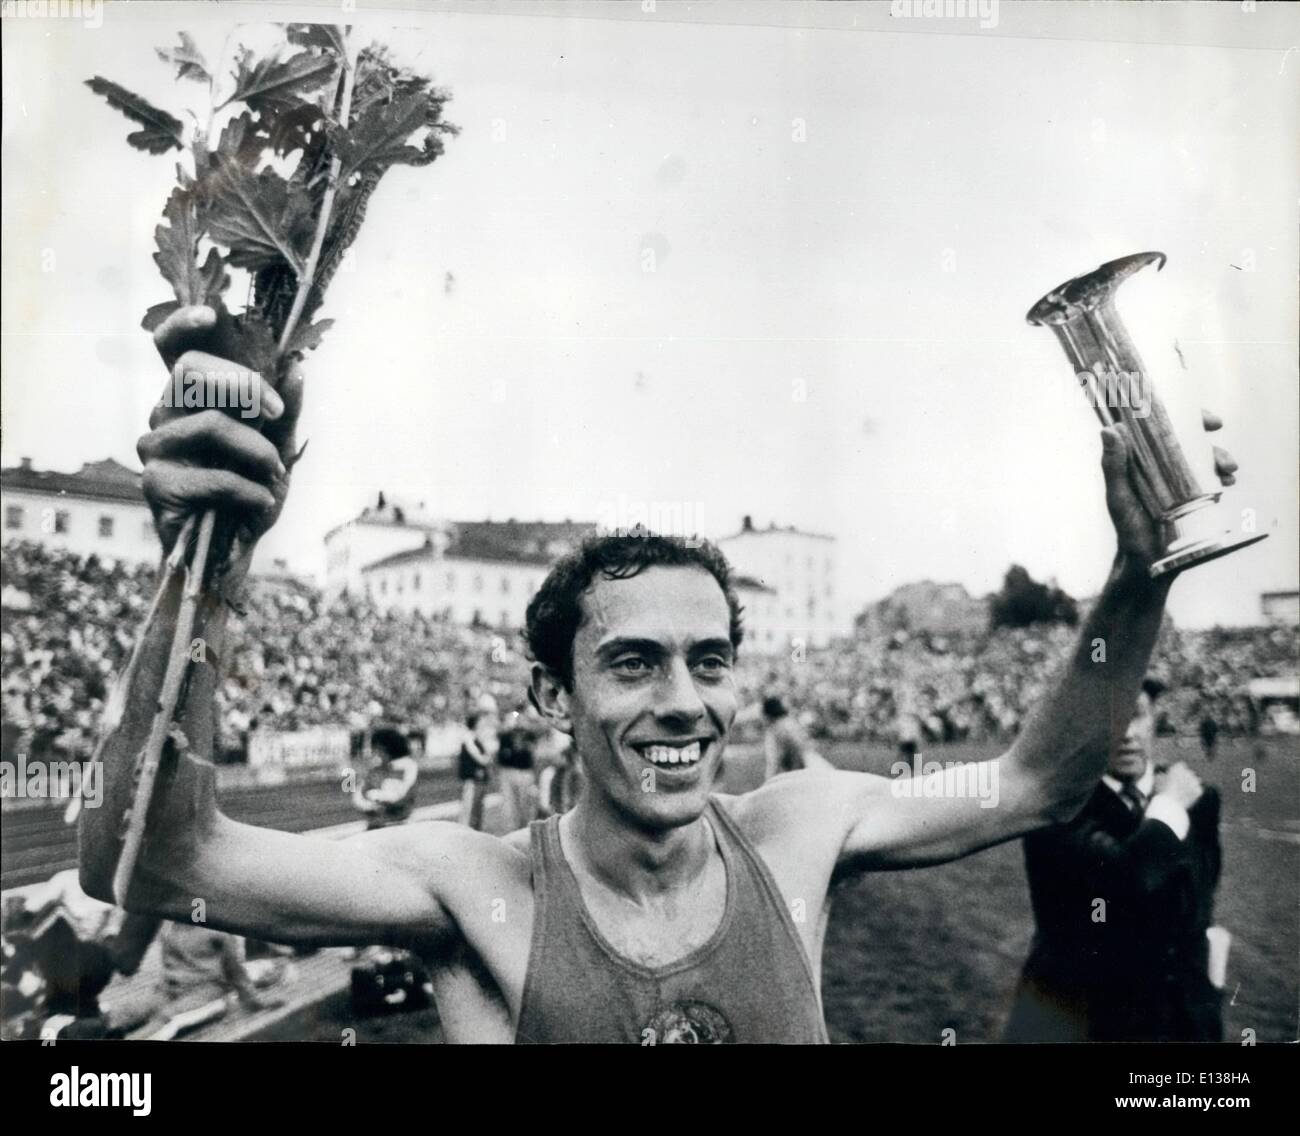 Feb. 29, 2012 - July 1980 Steve Ovett breaks world record for the mile in Oslo Ã¢â‚¬â€œ In the Bislett Stadium in Oslo, British Stock Photo